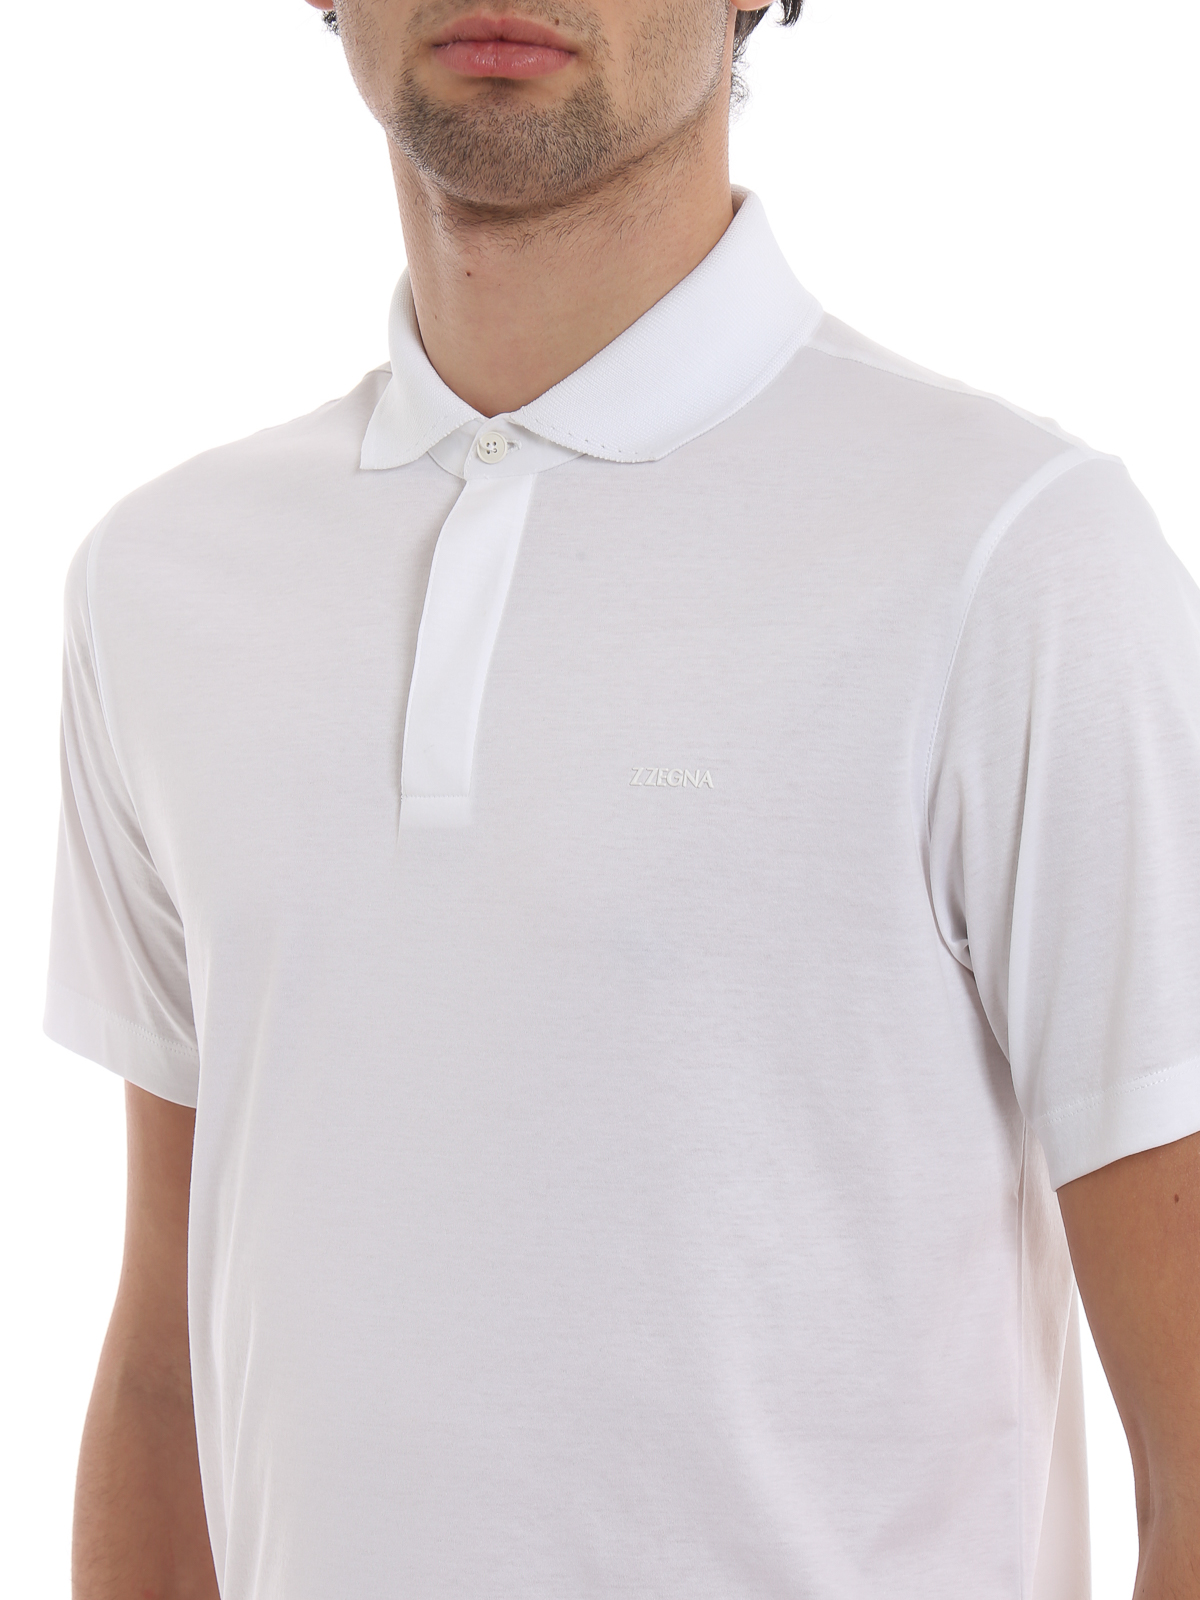 White cotton jersey polo shirt 